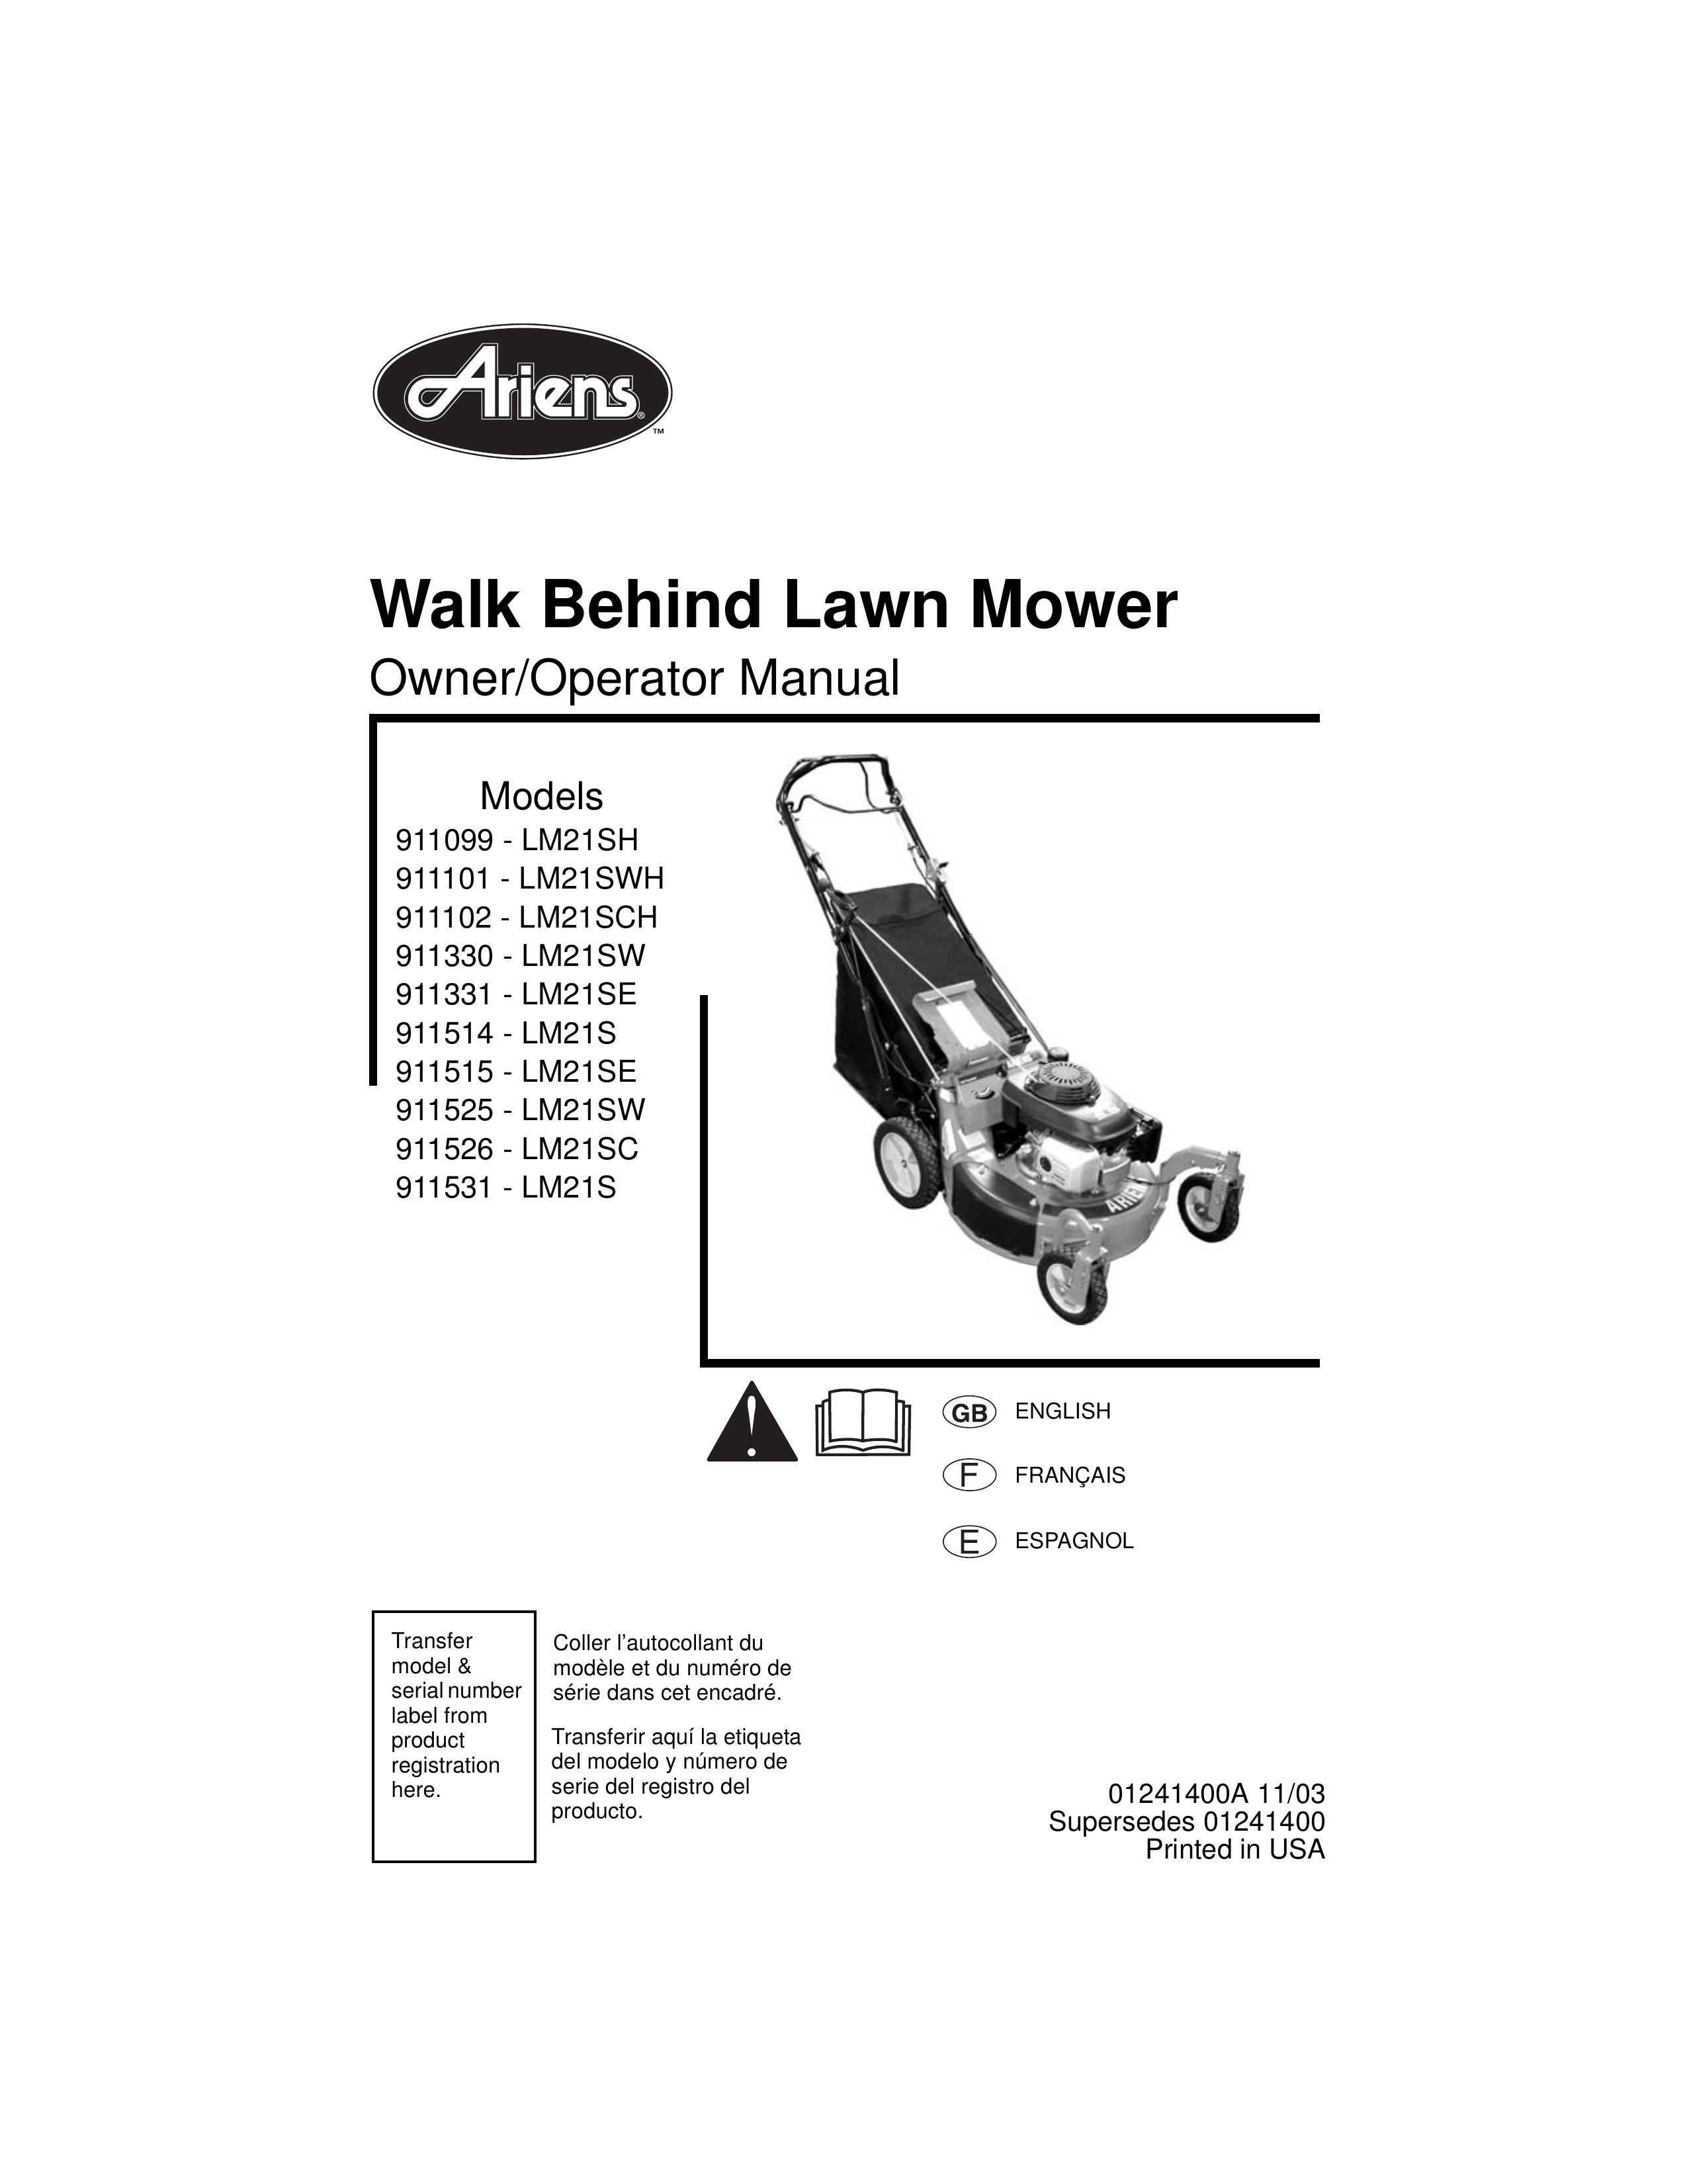 Ariens 911099 - LM21SH Lawn Mower User Manual